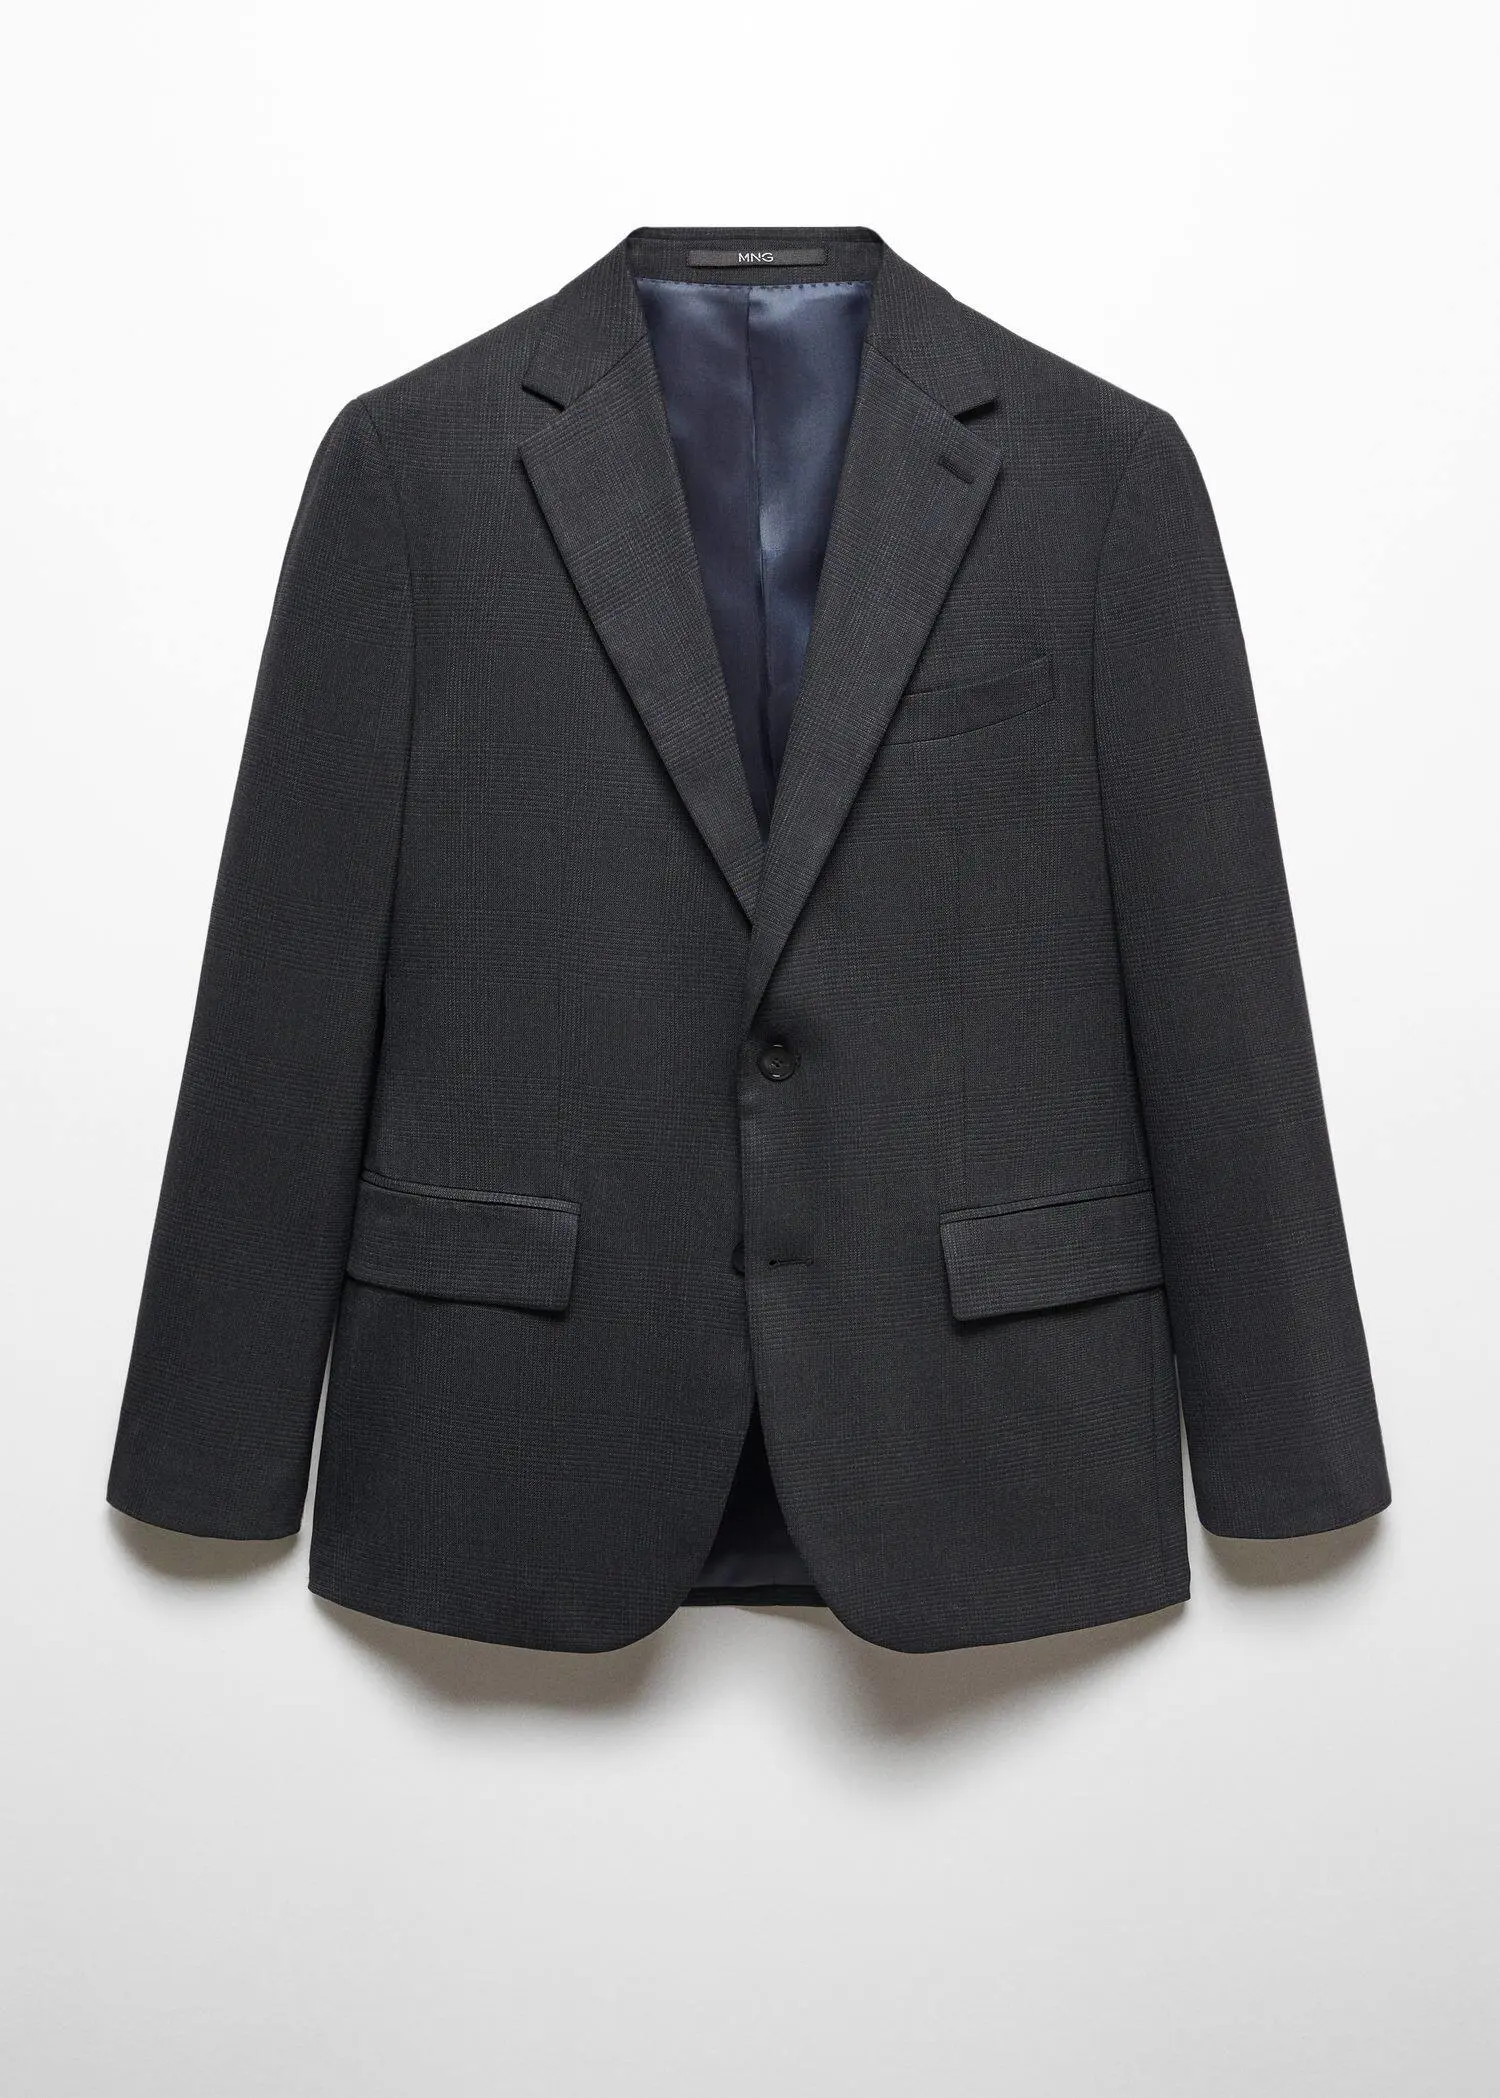 Mango Slim fit cold wool suit jacket. 1